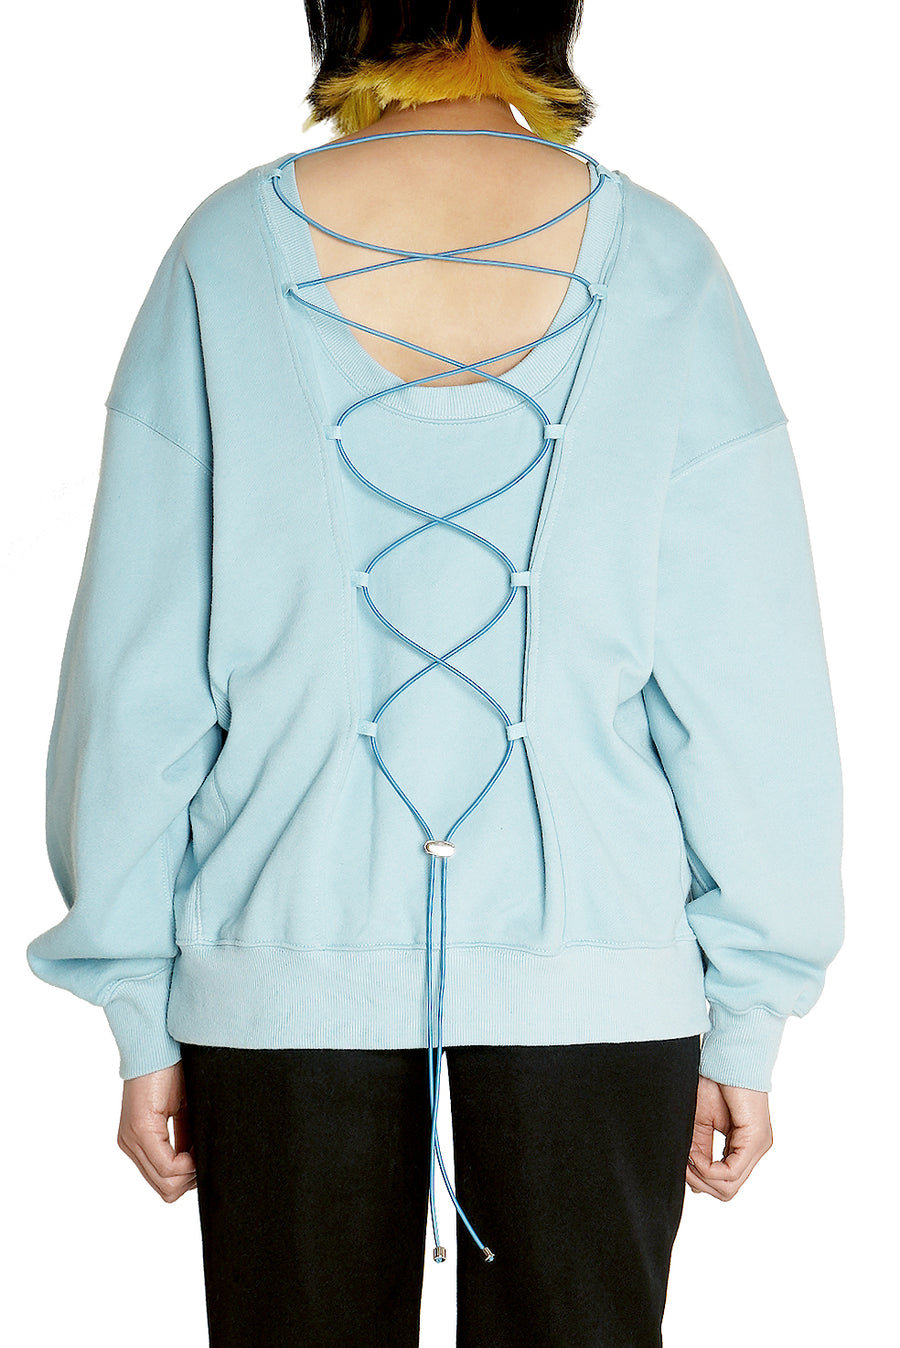 Ash Blue – Up Lace Back Sweatshirt CHANCE